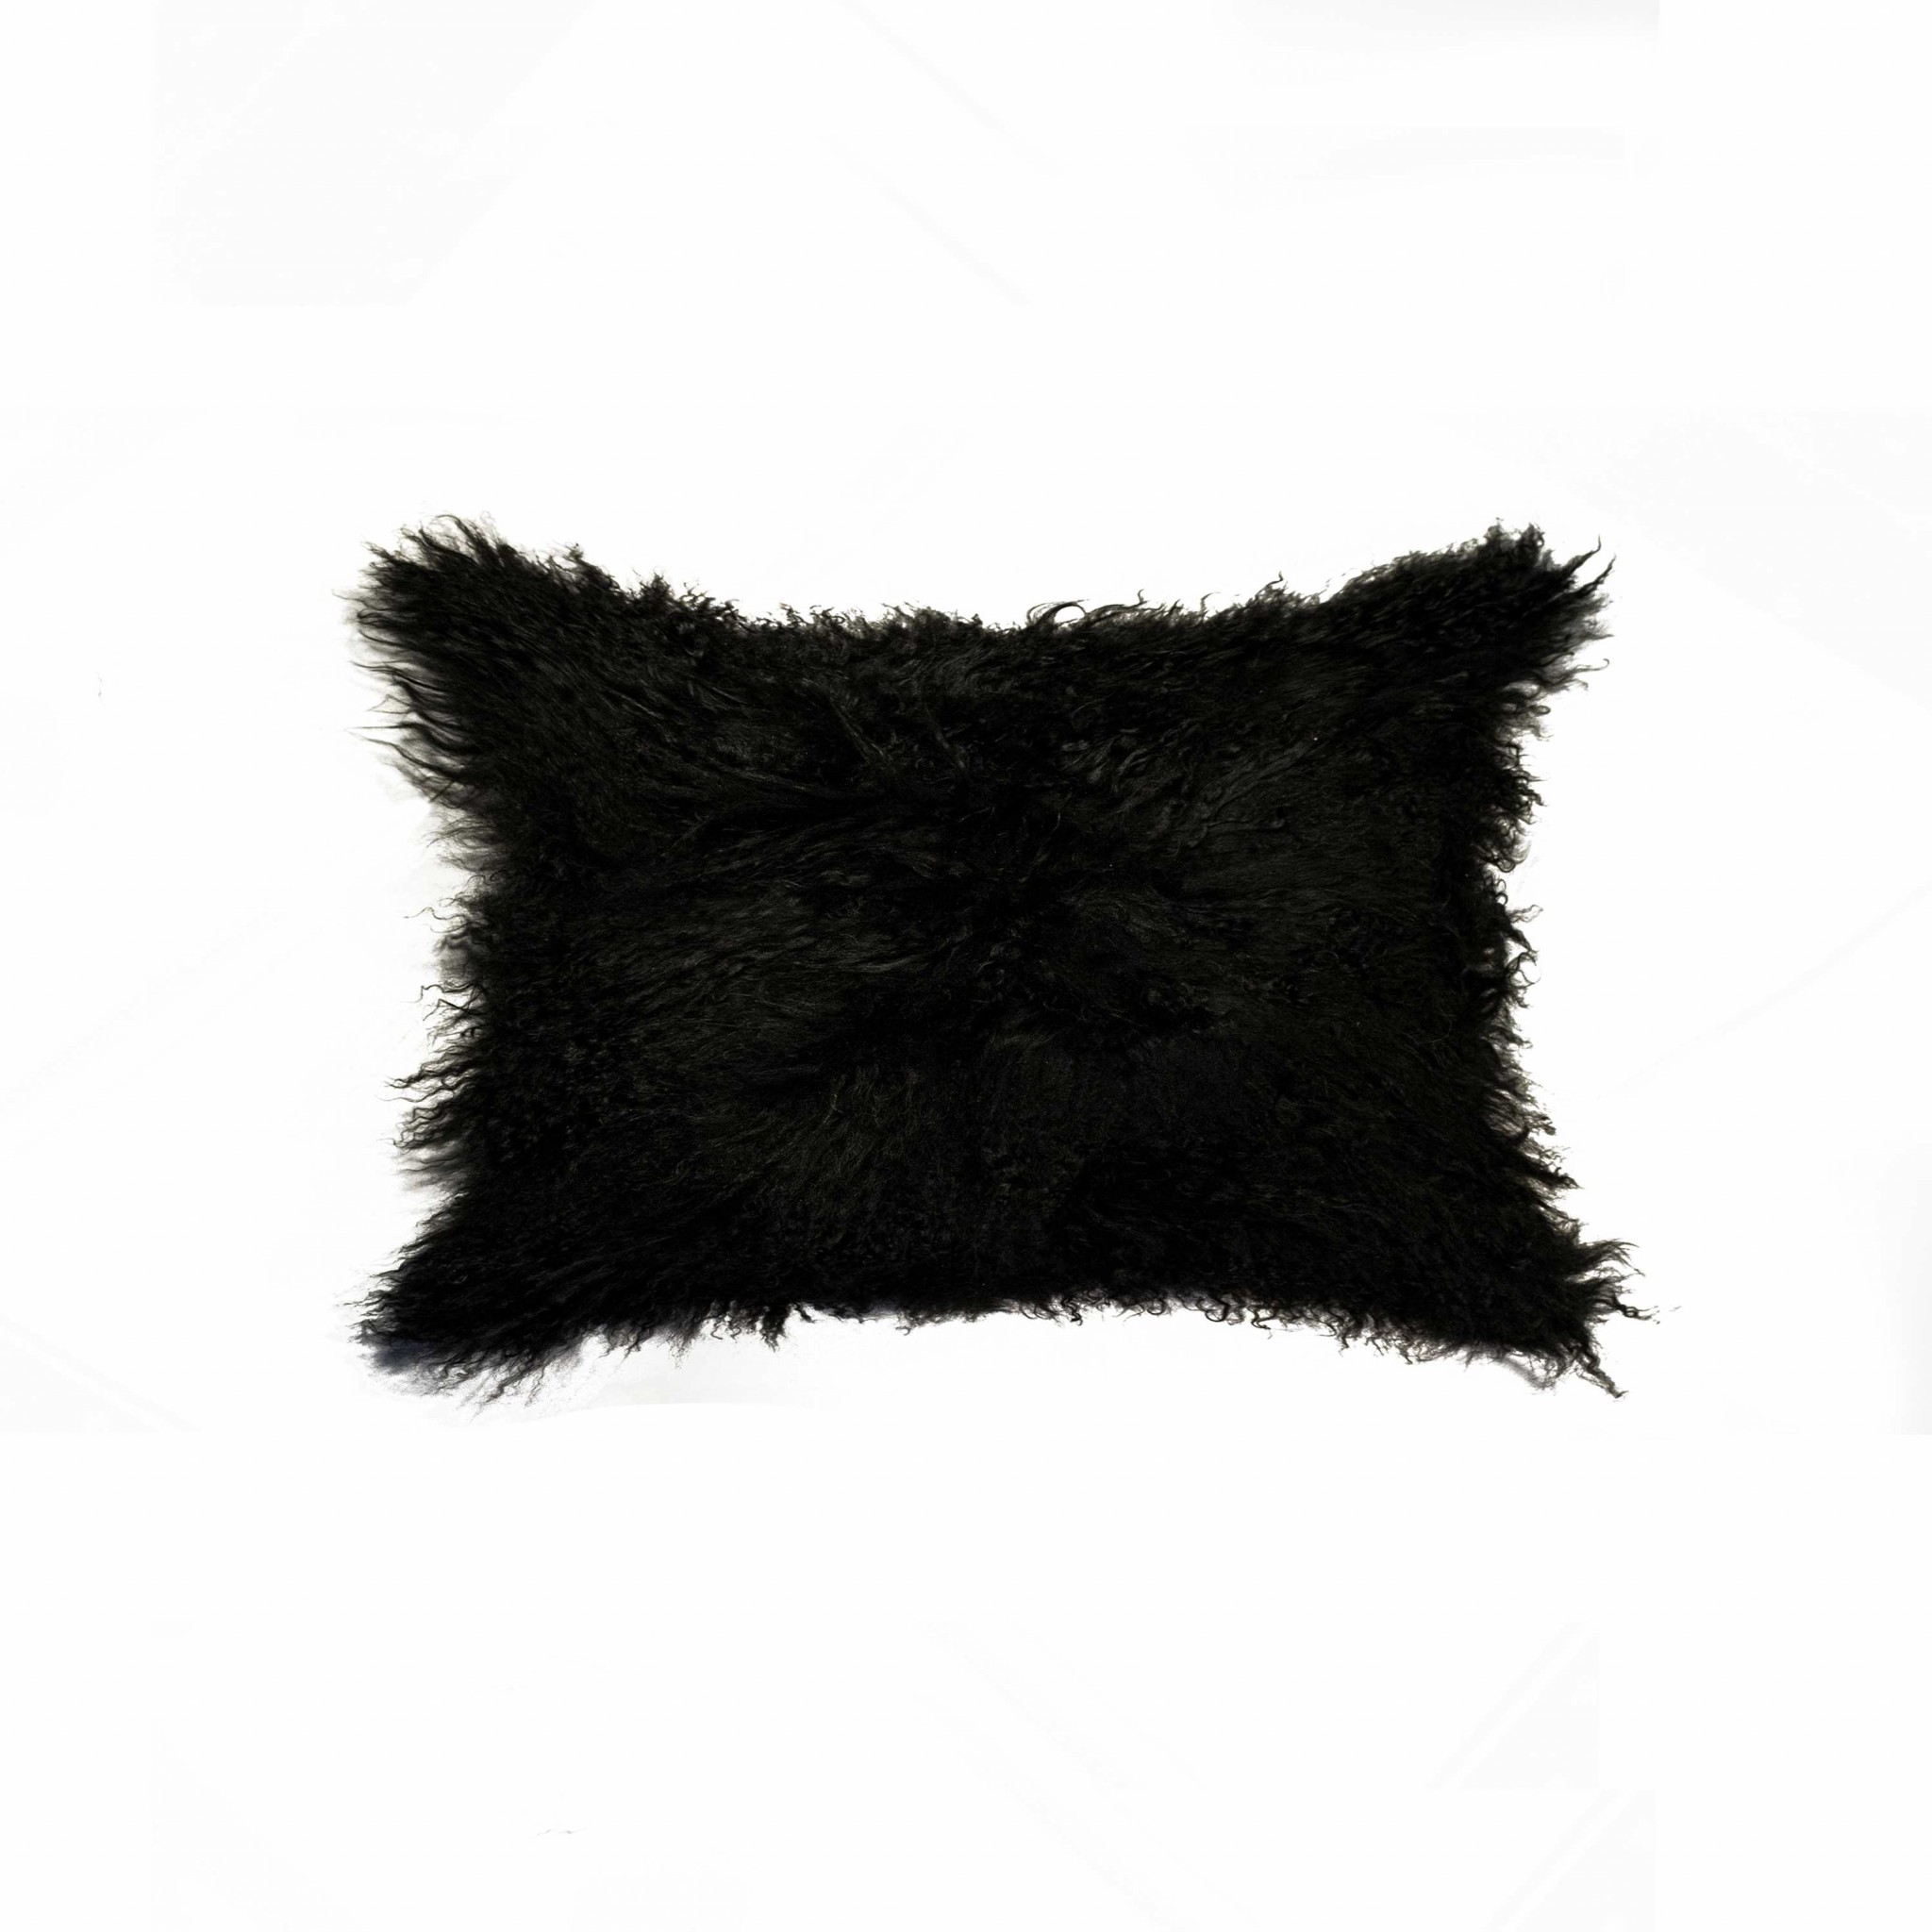 12" x 20" x 5" Black Sheepskin - Pillow